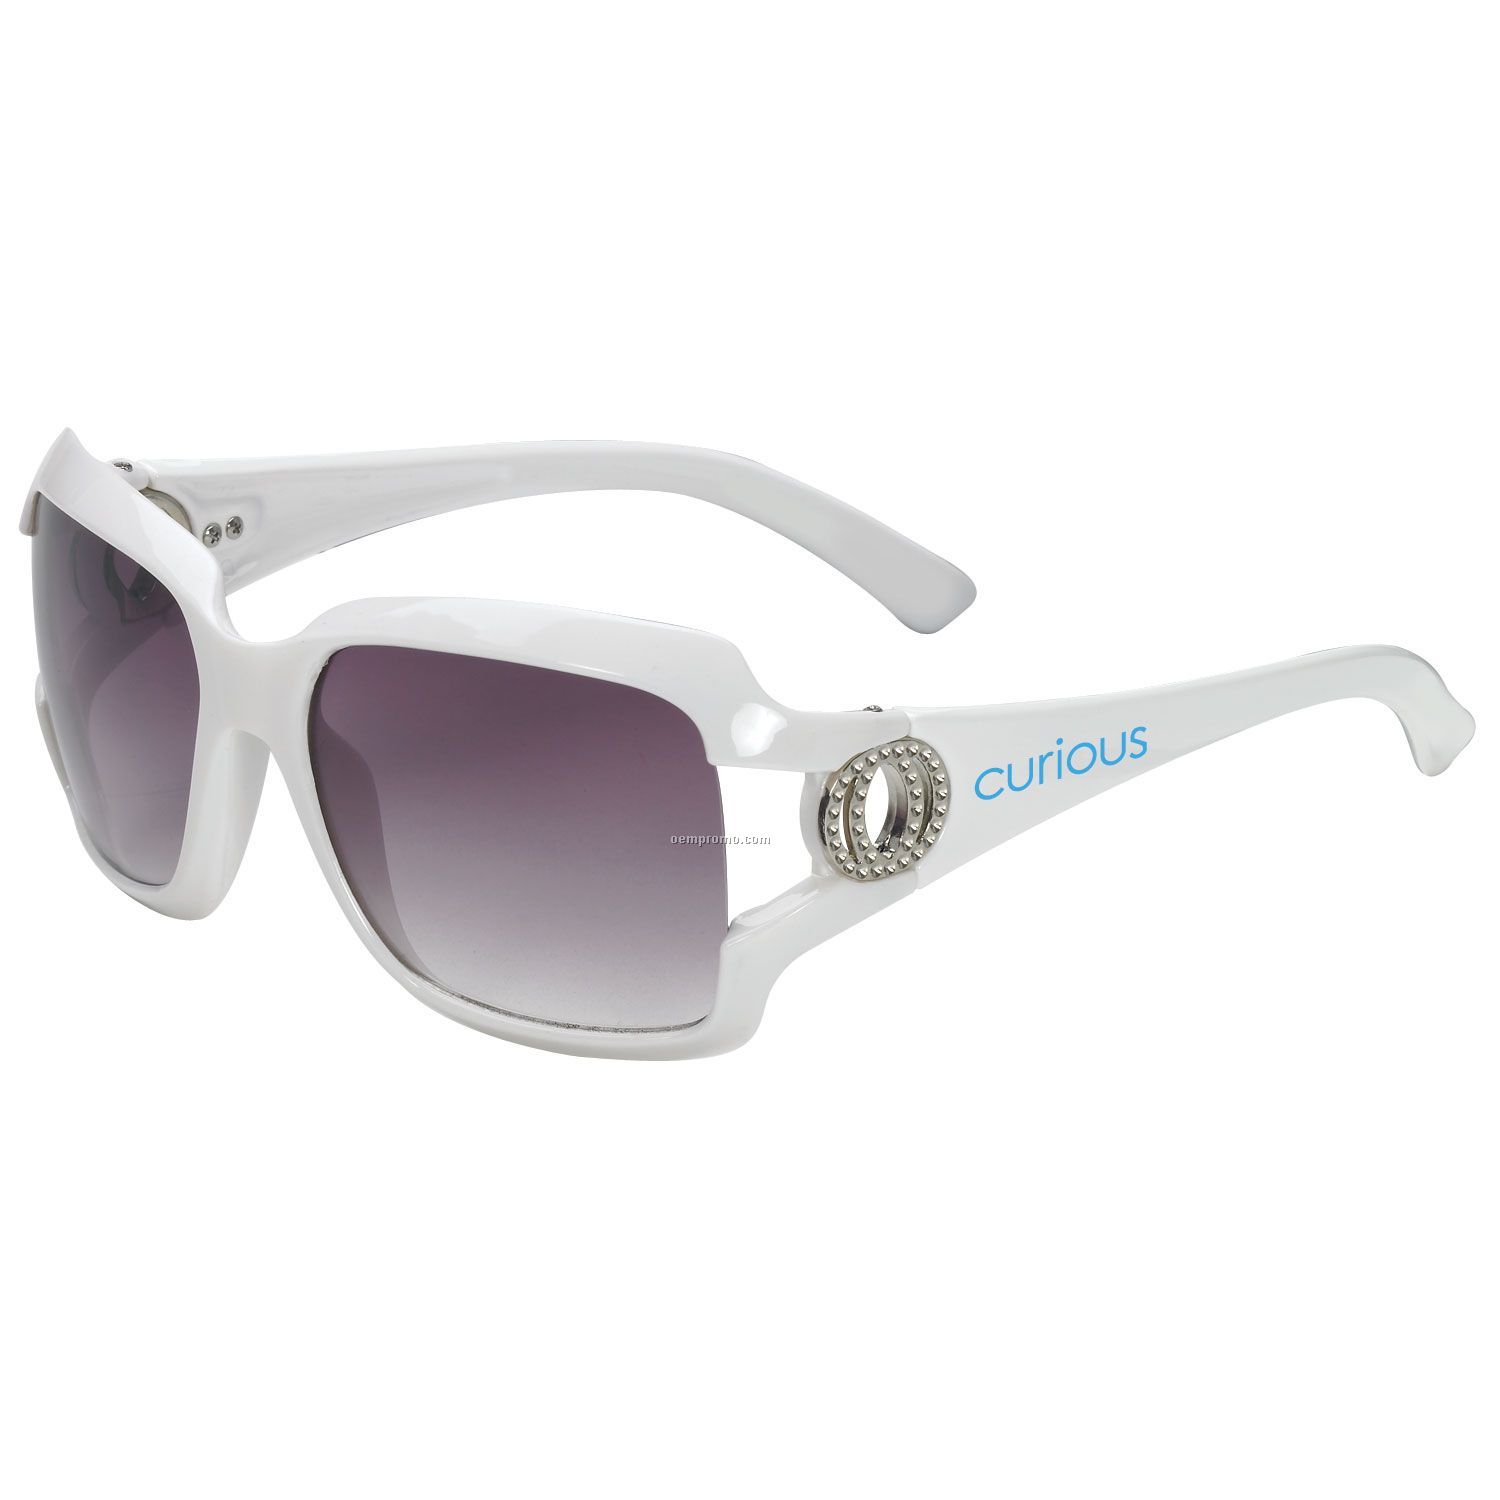 Glamour Sunglasses W/ Large Frame & Gradient Lens